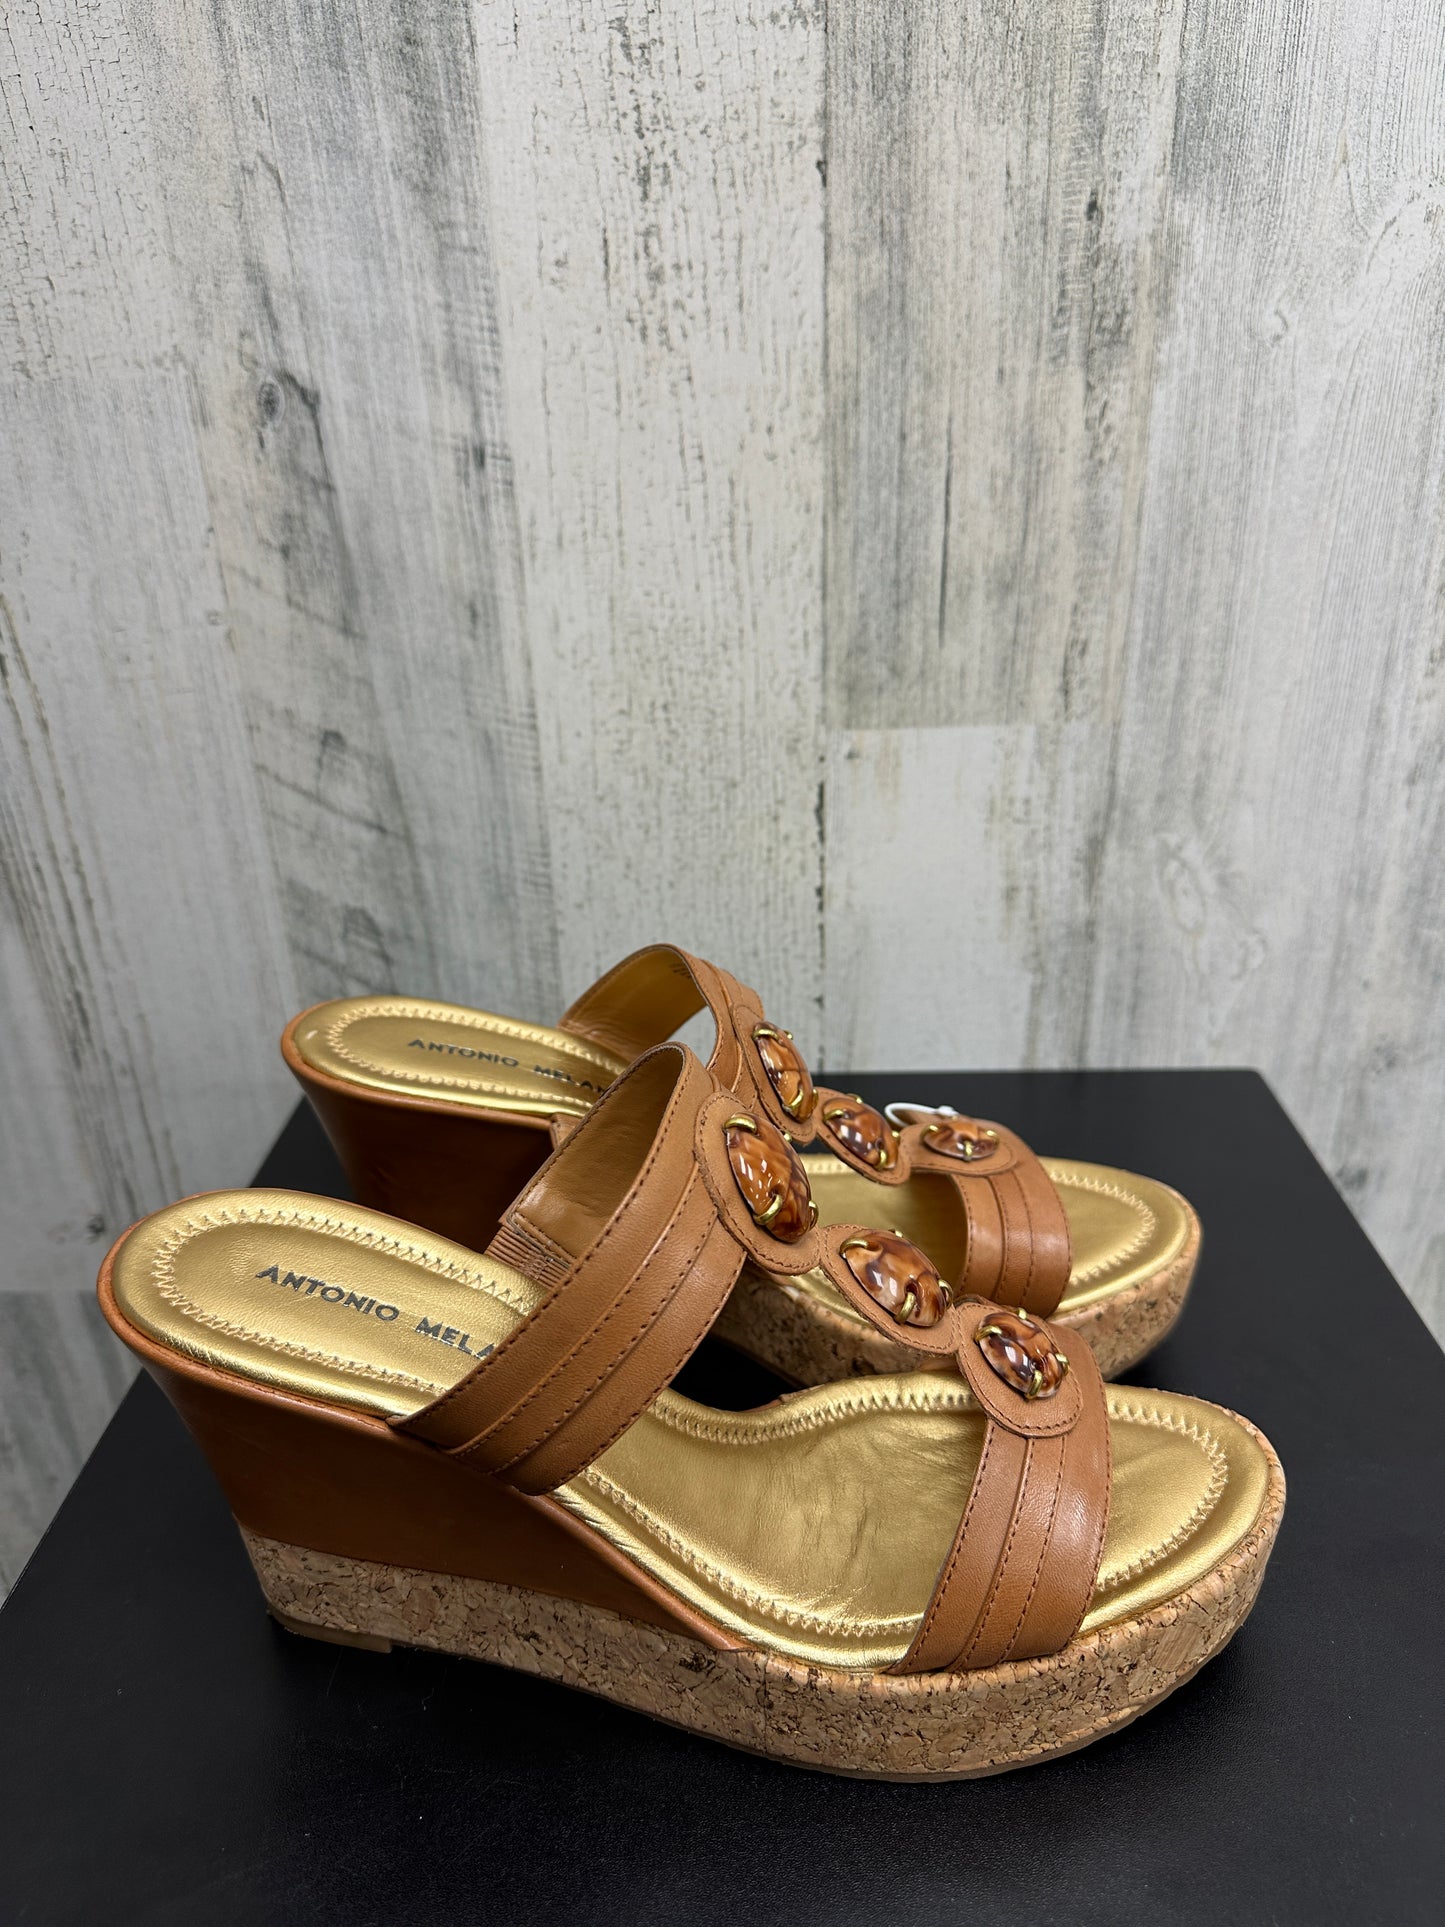 Sandals Heels Wedge By Antonio Melani  Size: 10